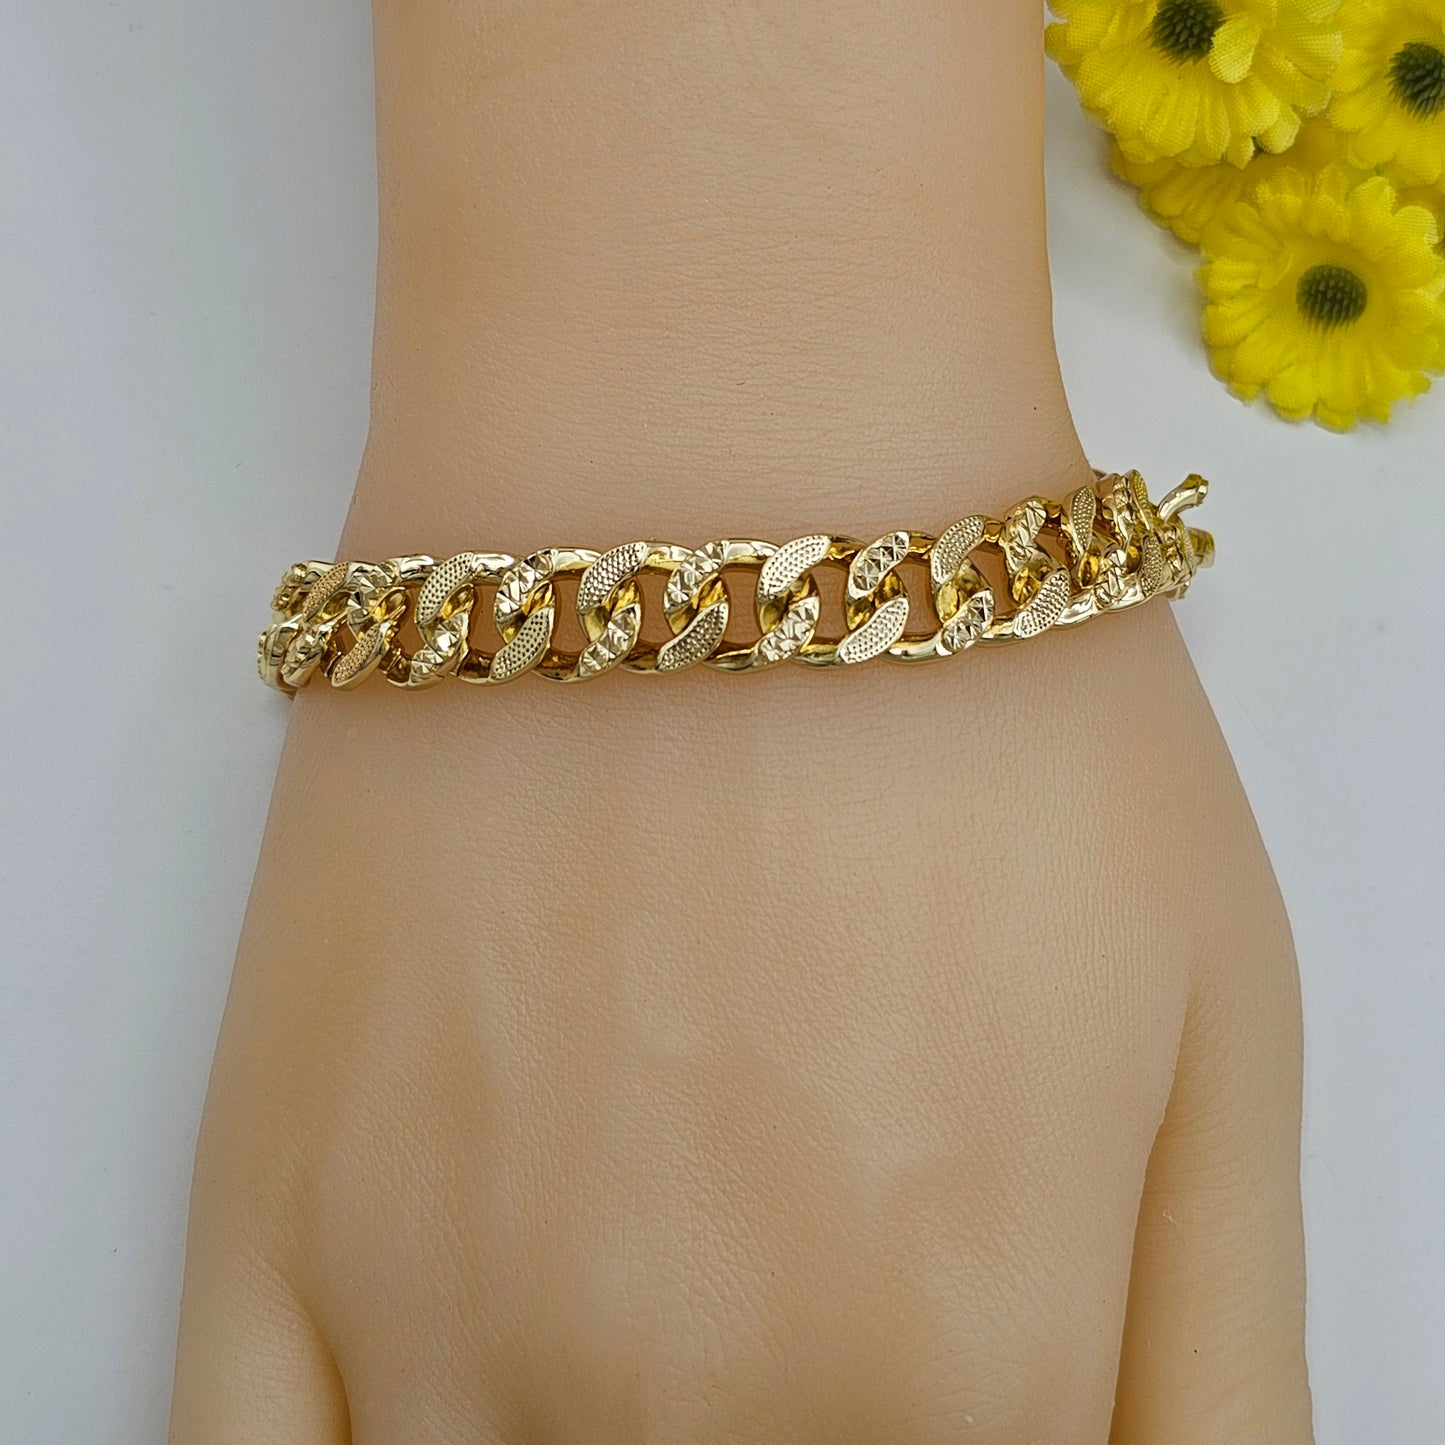 Bracelets - 14K Gold Plated. Cuban Chain Bracelet - 10mm